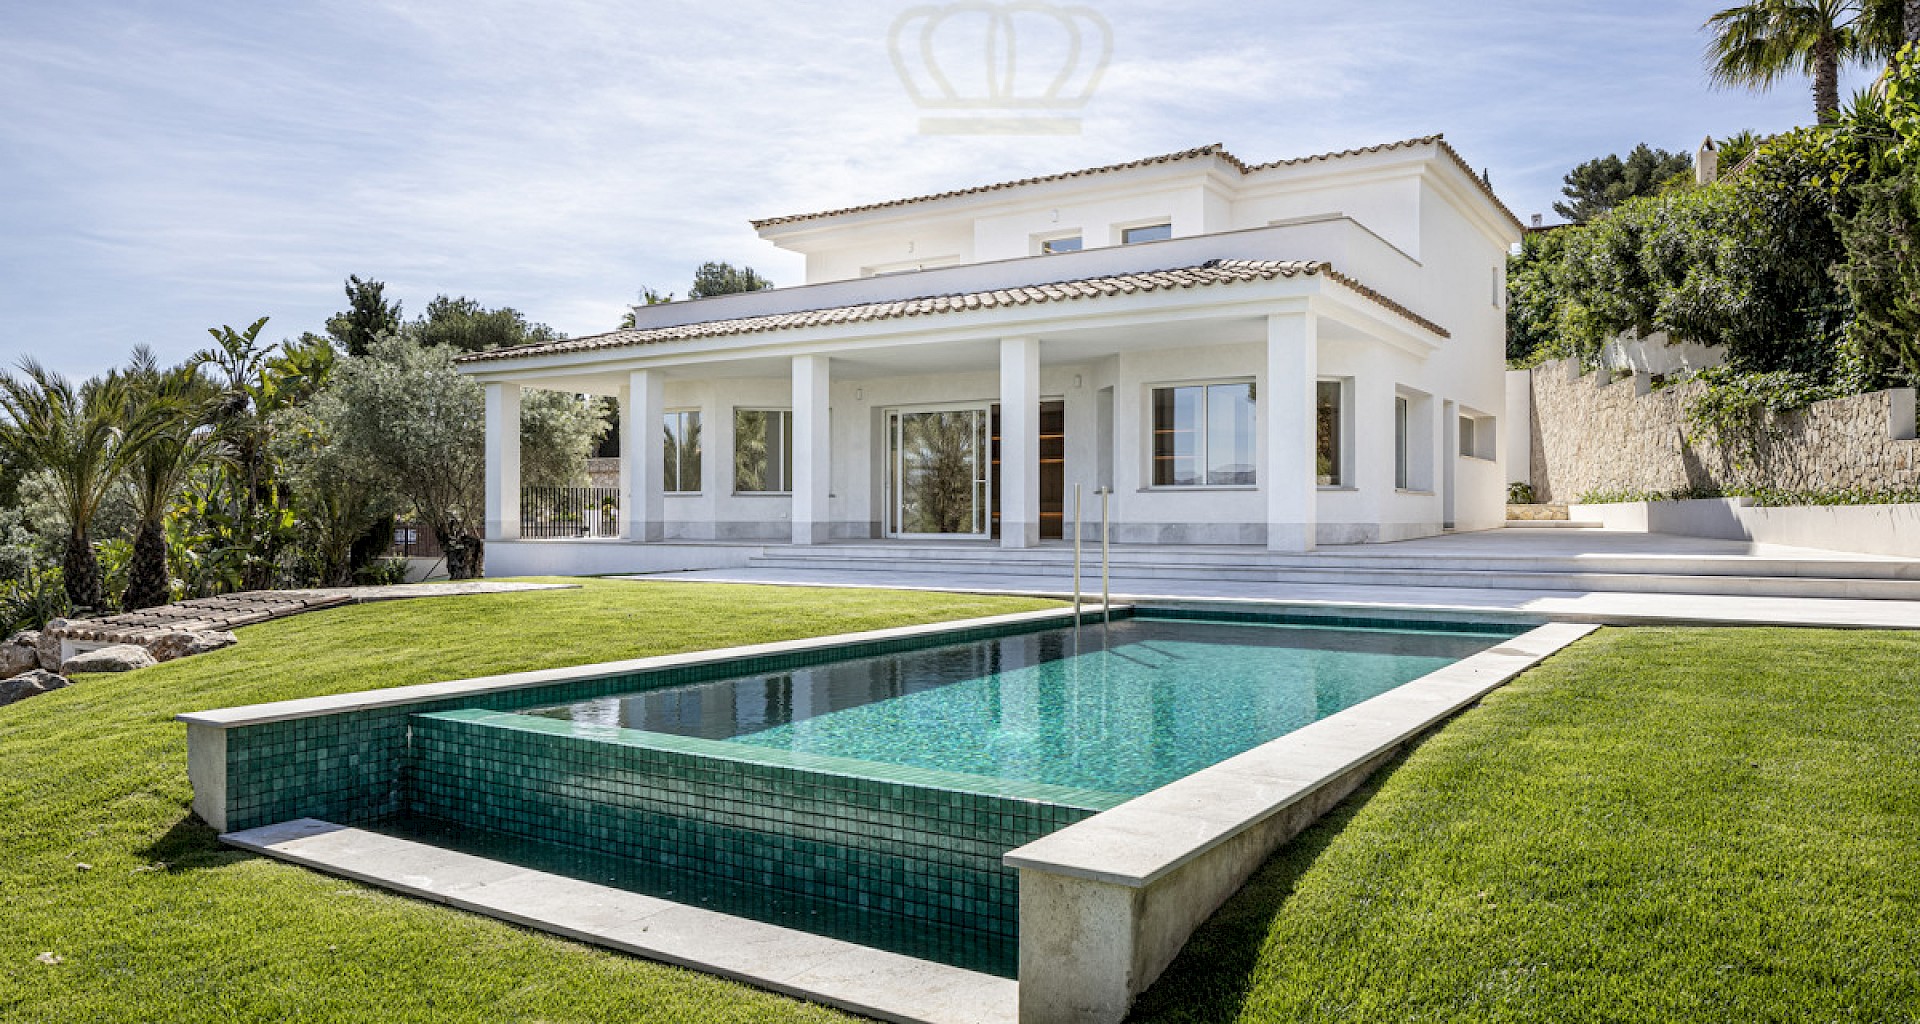 KROHN & LUEDEMANN Villa modernizada con vistas al mar en Santa Ponsa Mallorca con parcela plana 